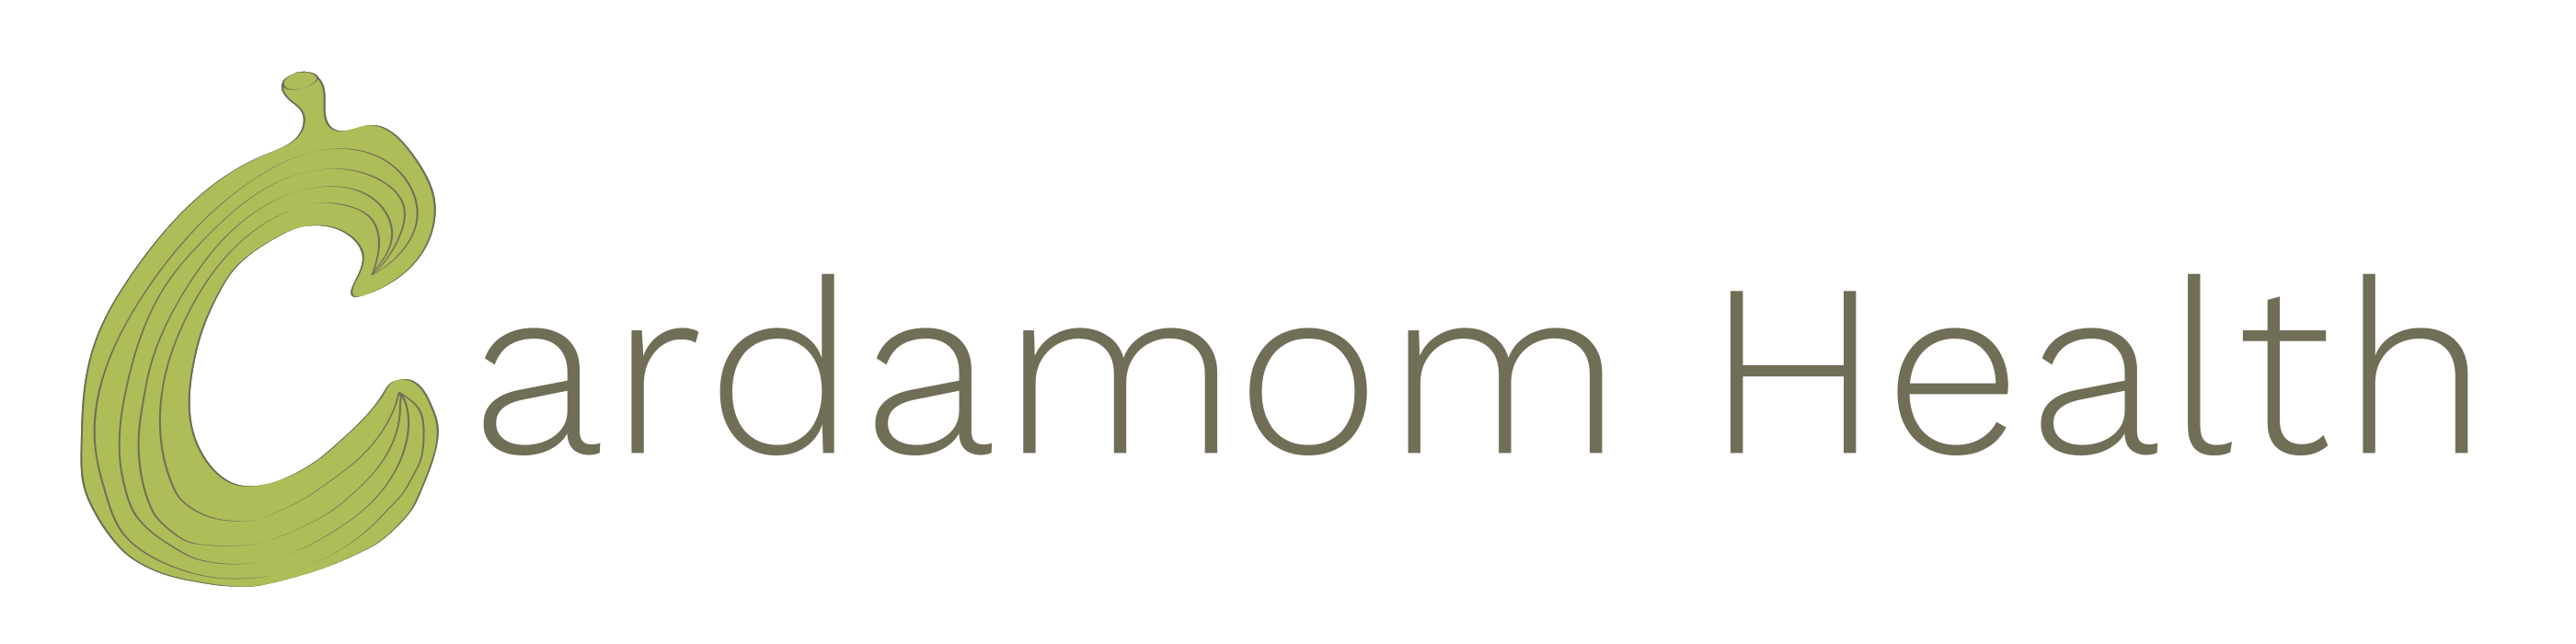 Cardamom Health Logo - Full Color